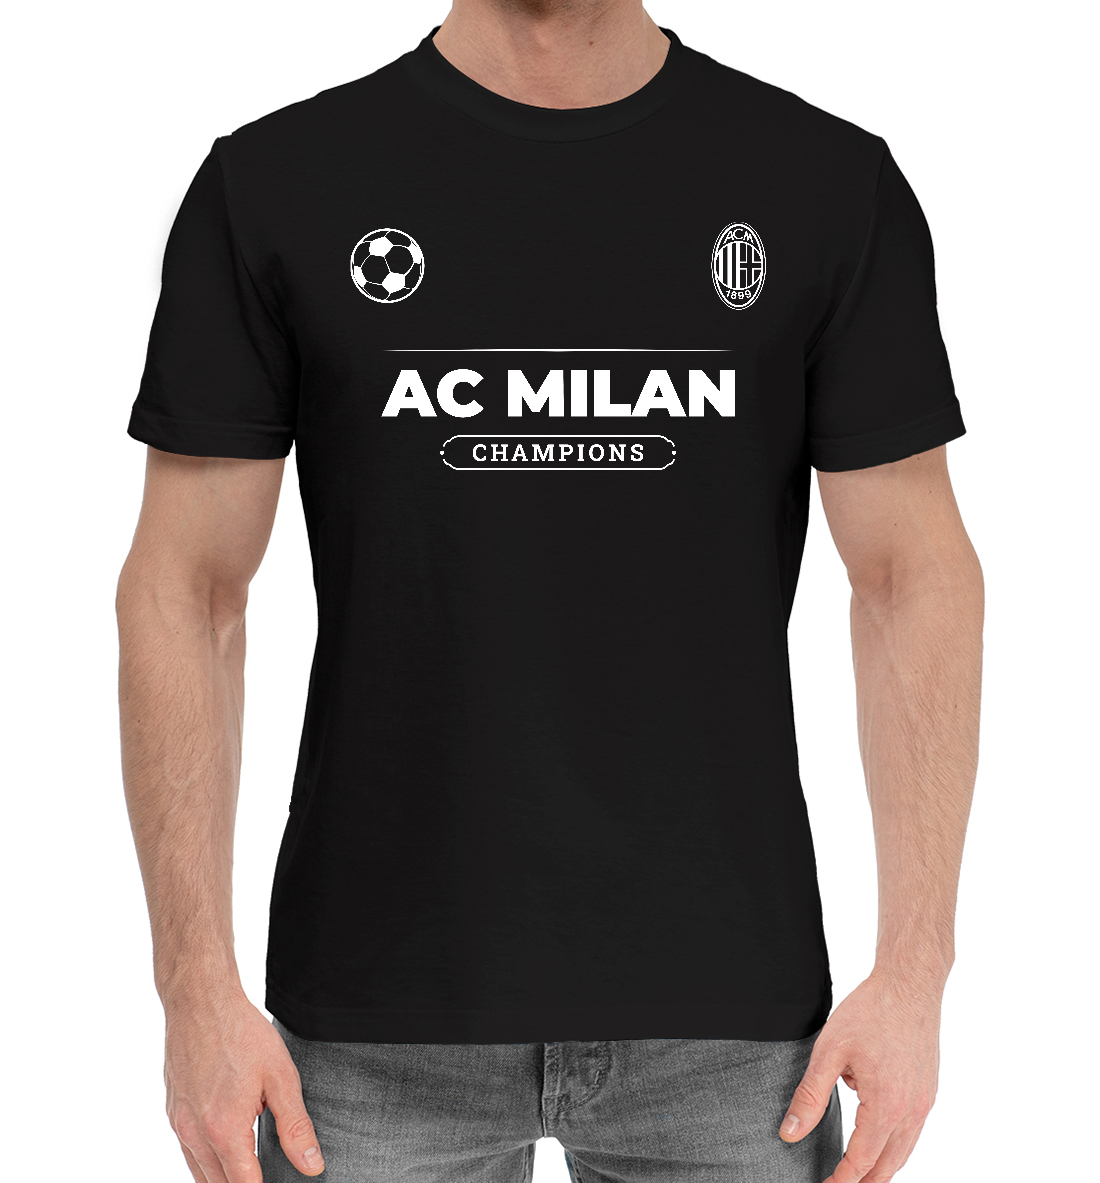 Мужская Хлопковая футболка AC Milan Форма Чемпионов, артикул ACM-461376-hfu-2mp